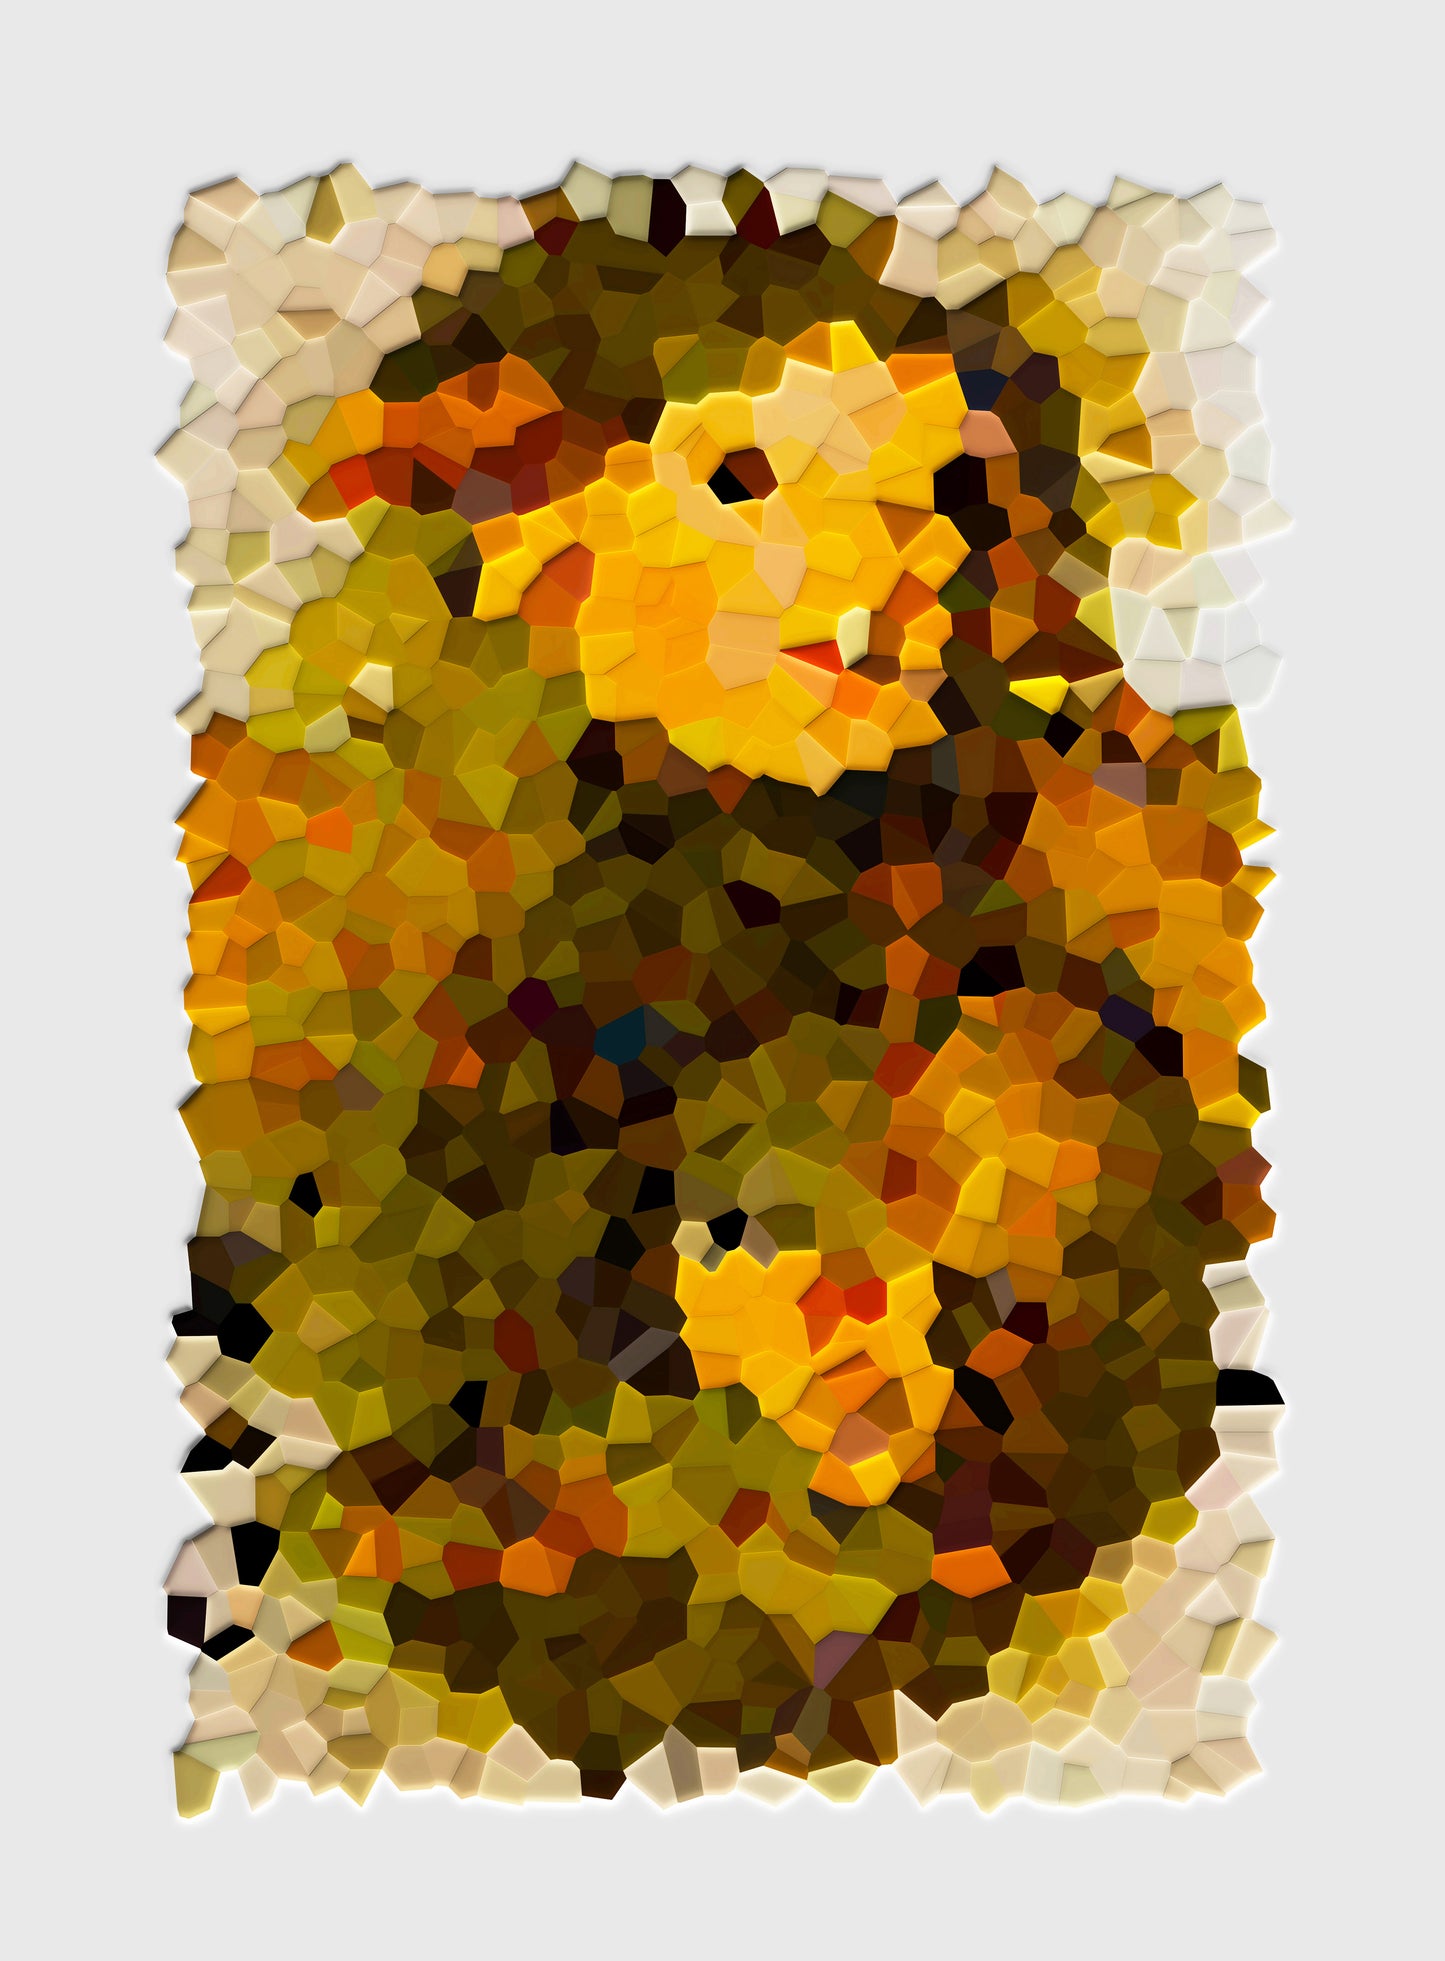 The Imaginary Portrait #182 - The Lamb